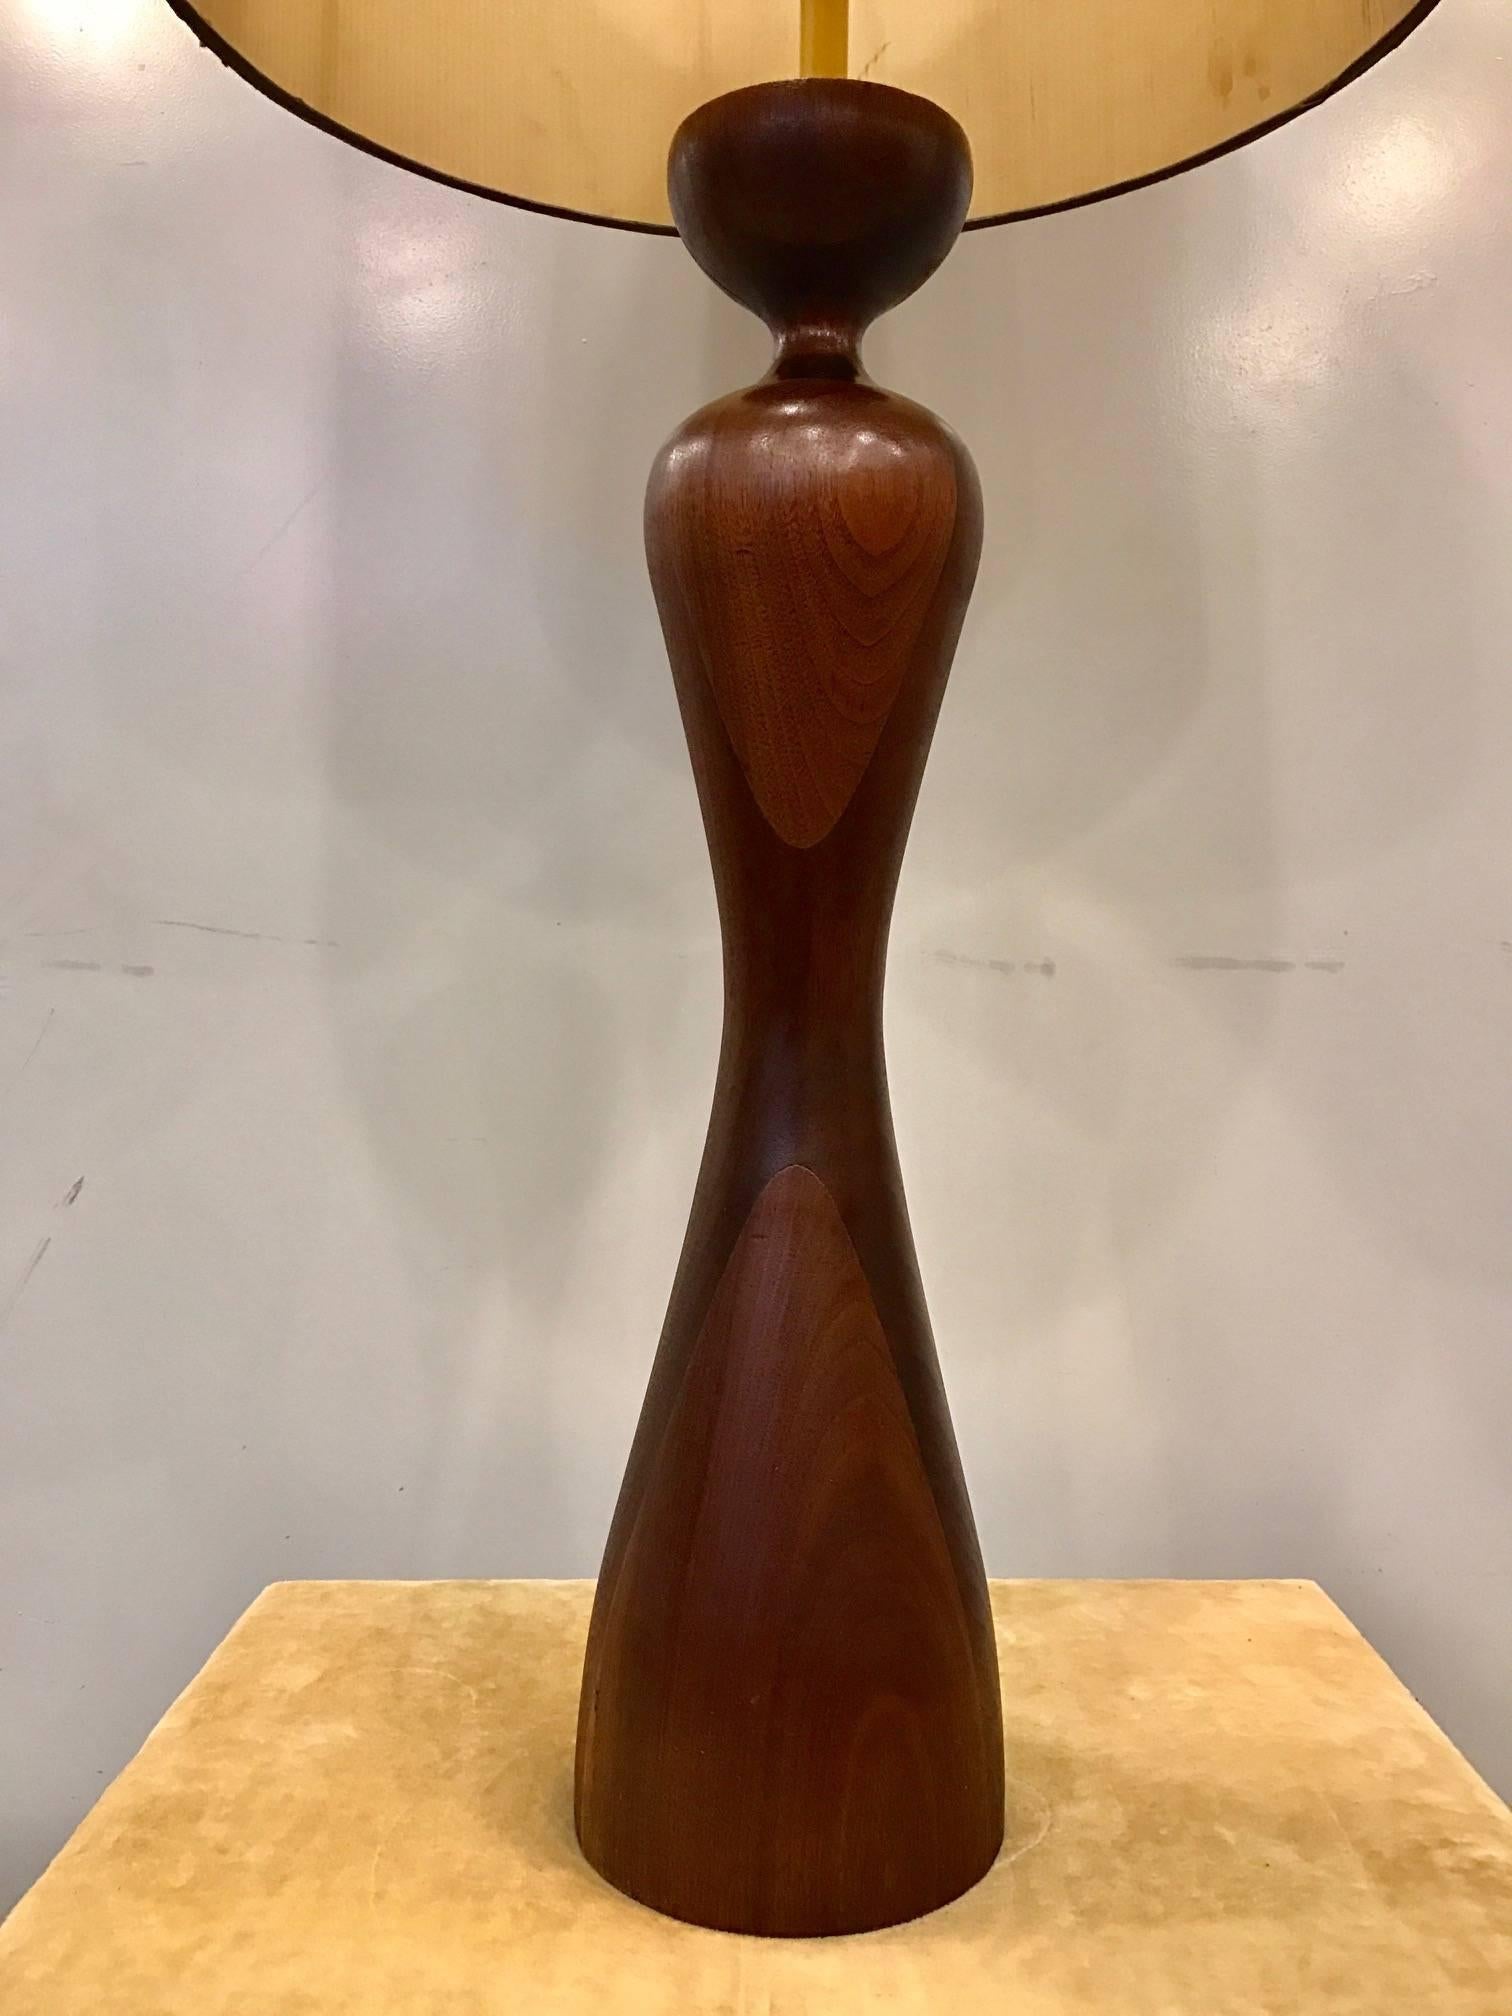 Pair of Phillip Lloyd Powell sculptural walnut lamps.
Measures: 39